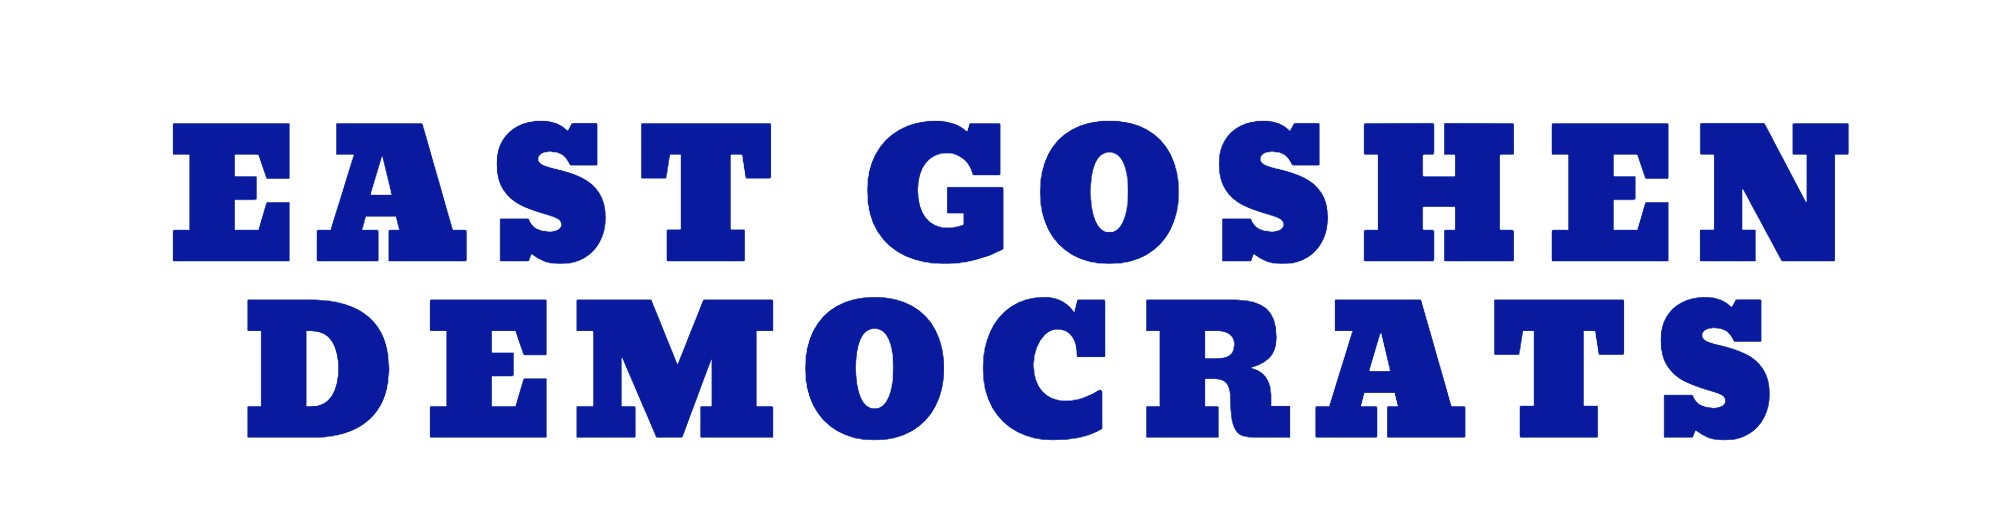 East Goshen Democrats logo